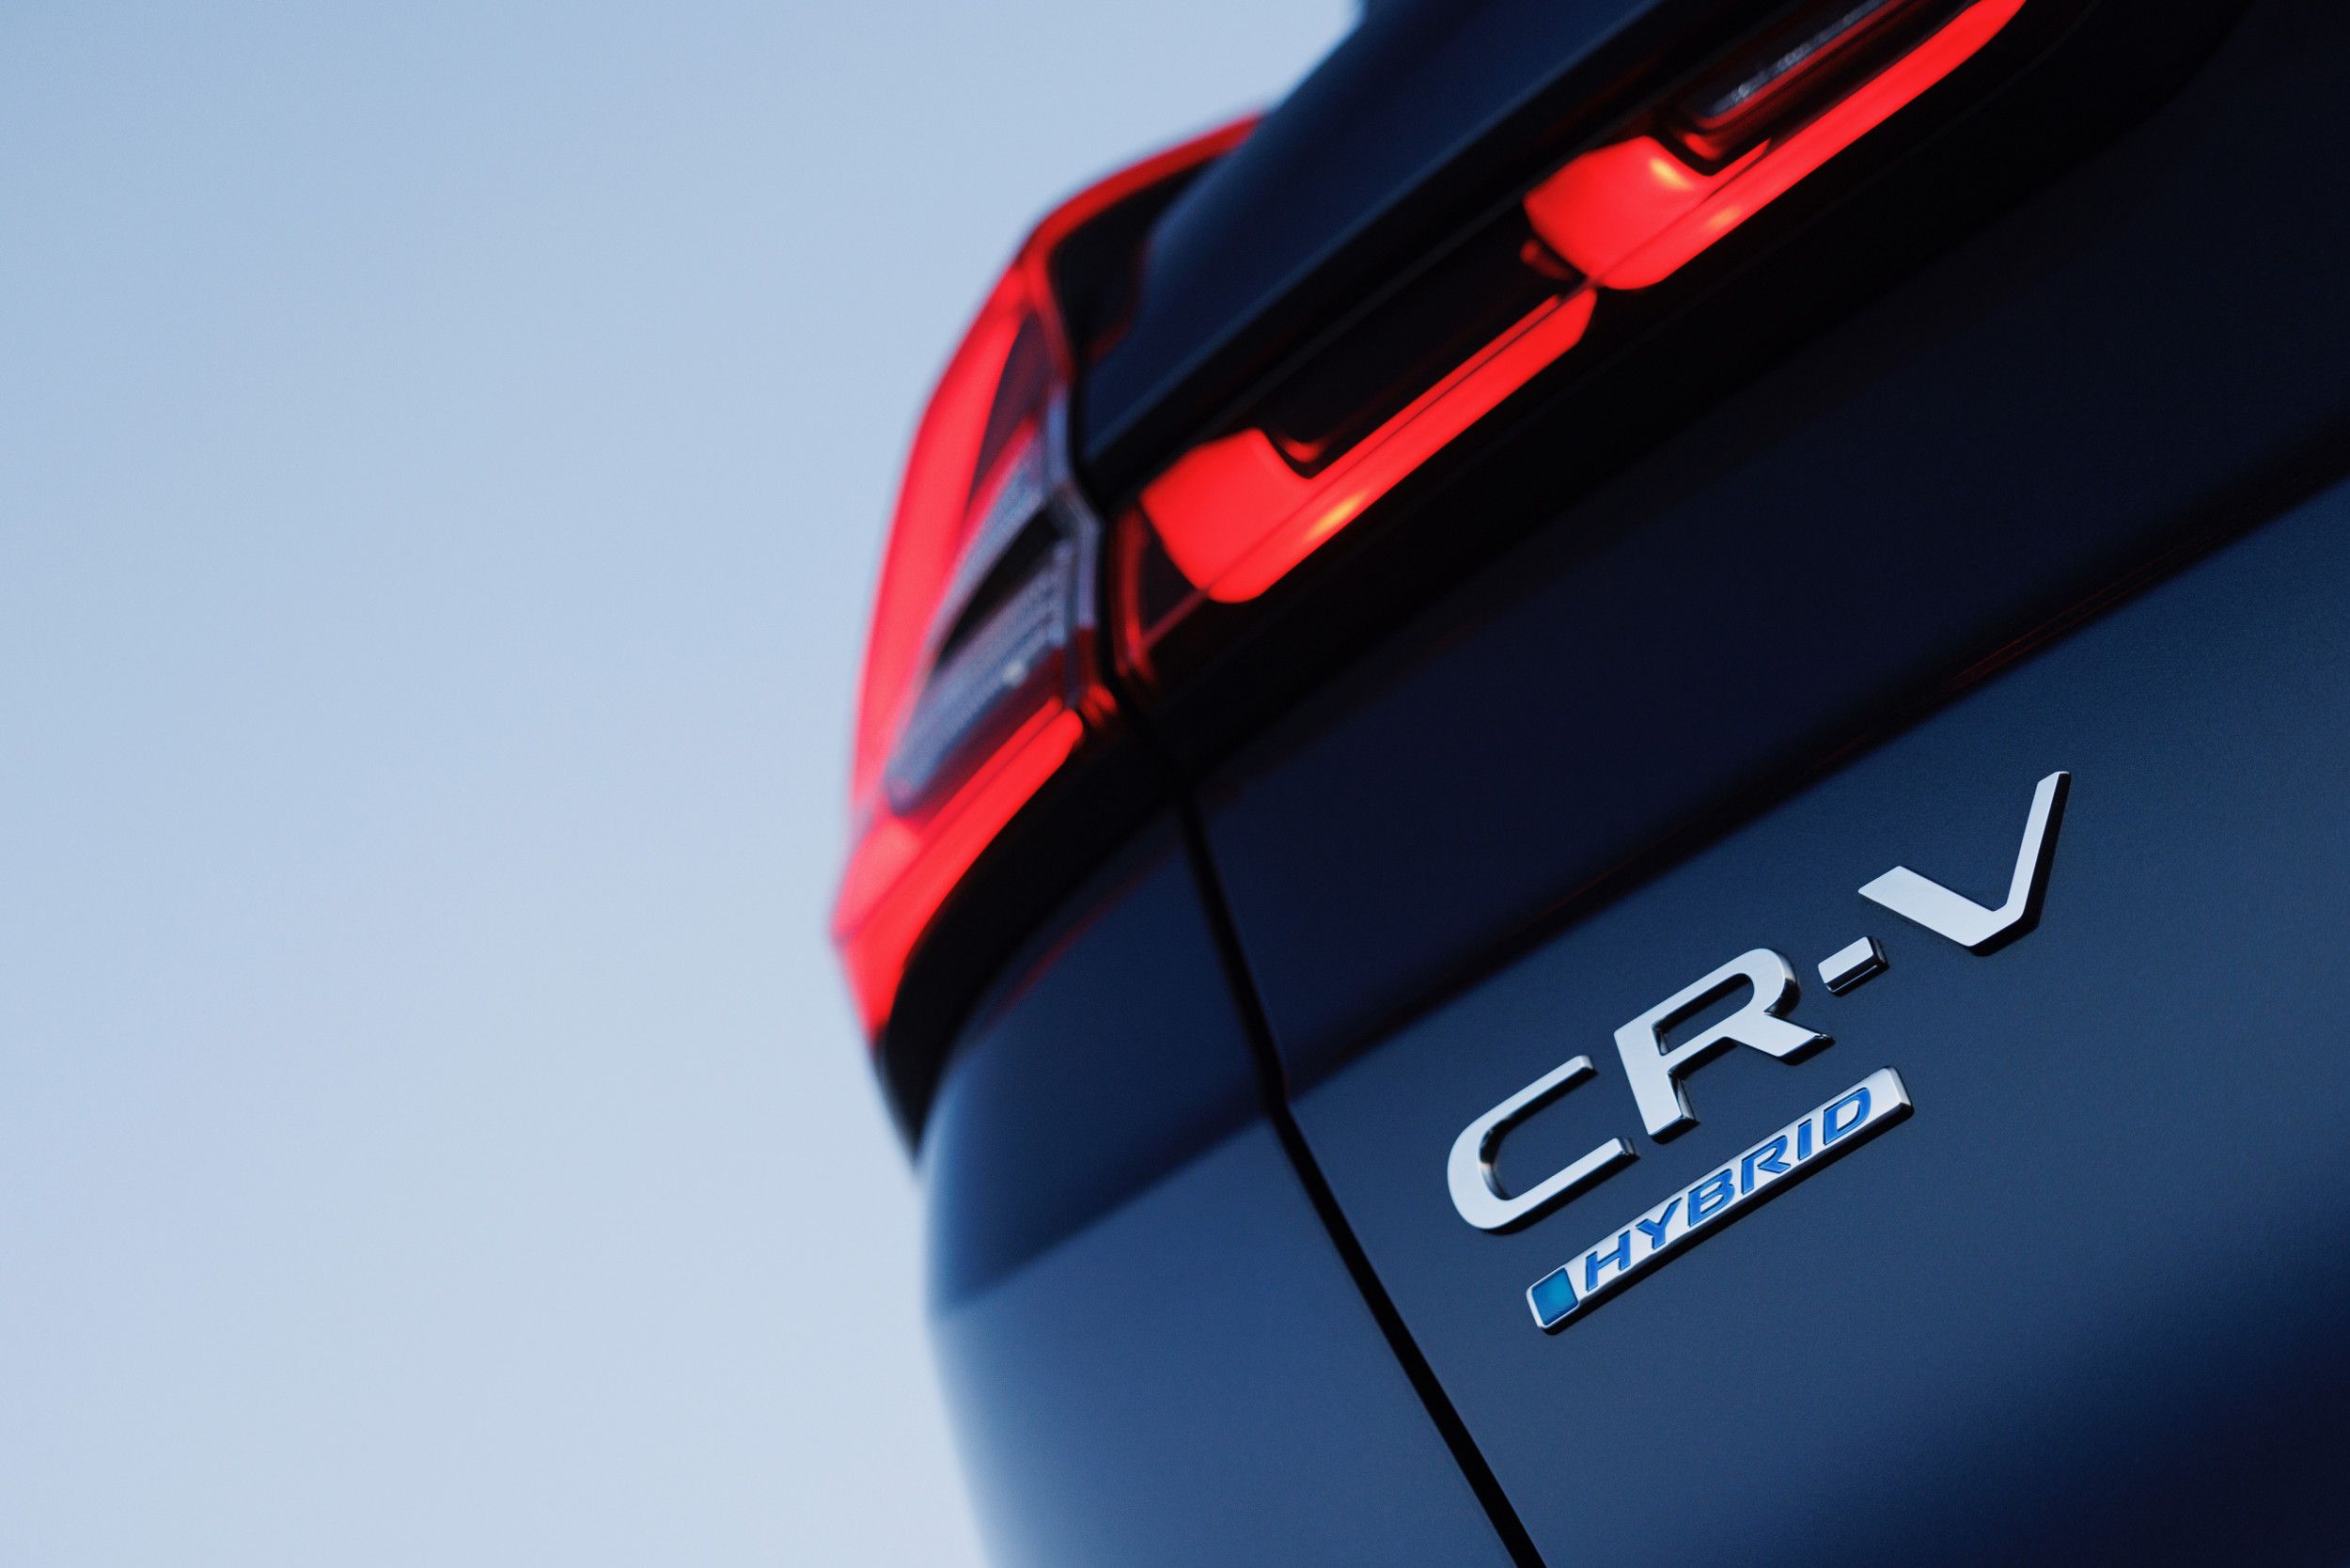  Honda CRV Hintergrundbild 2500x1668. Next Generation Honda CR V Teased As Freshly 'Rugged' And 'Sophisticated'